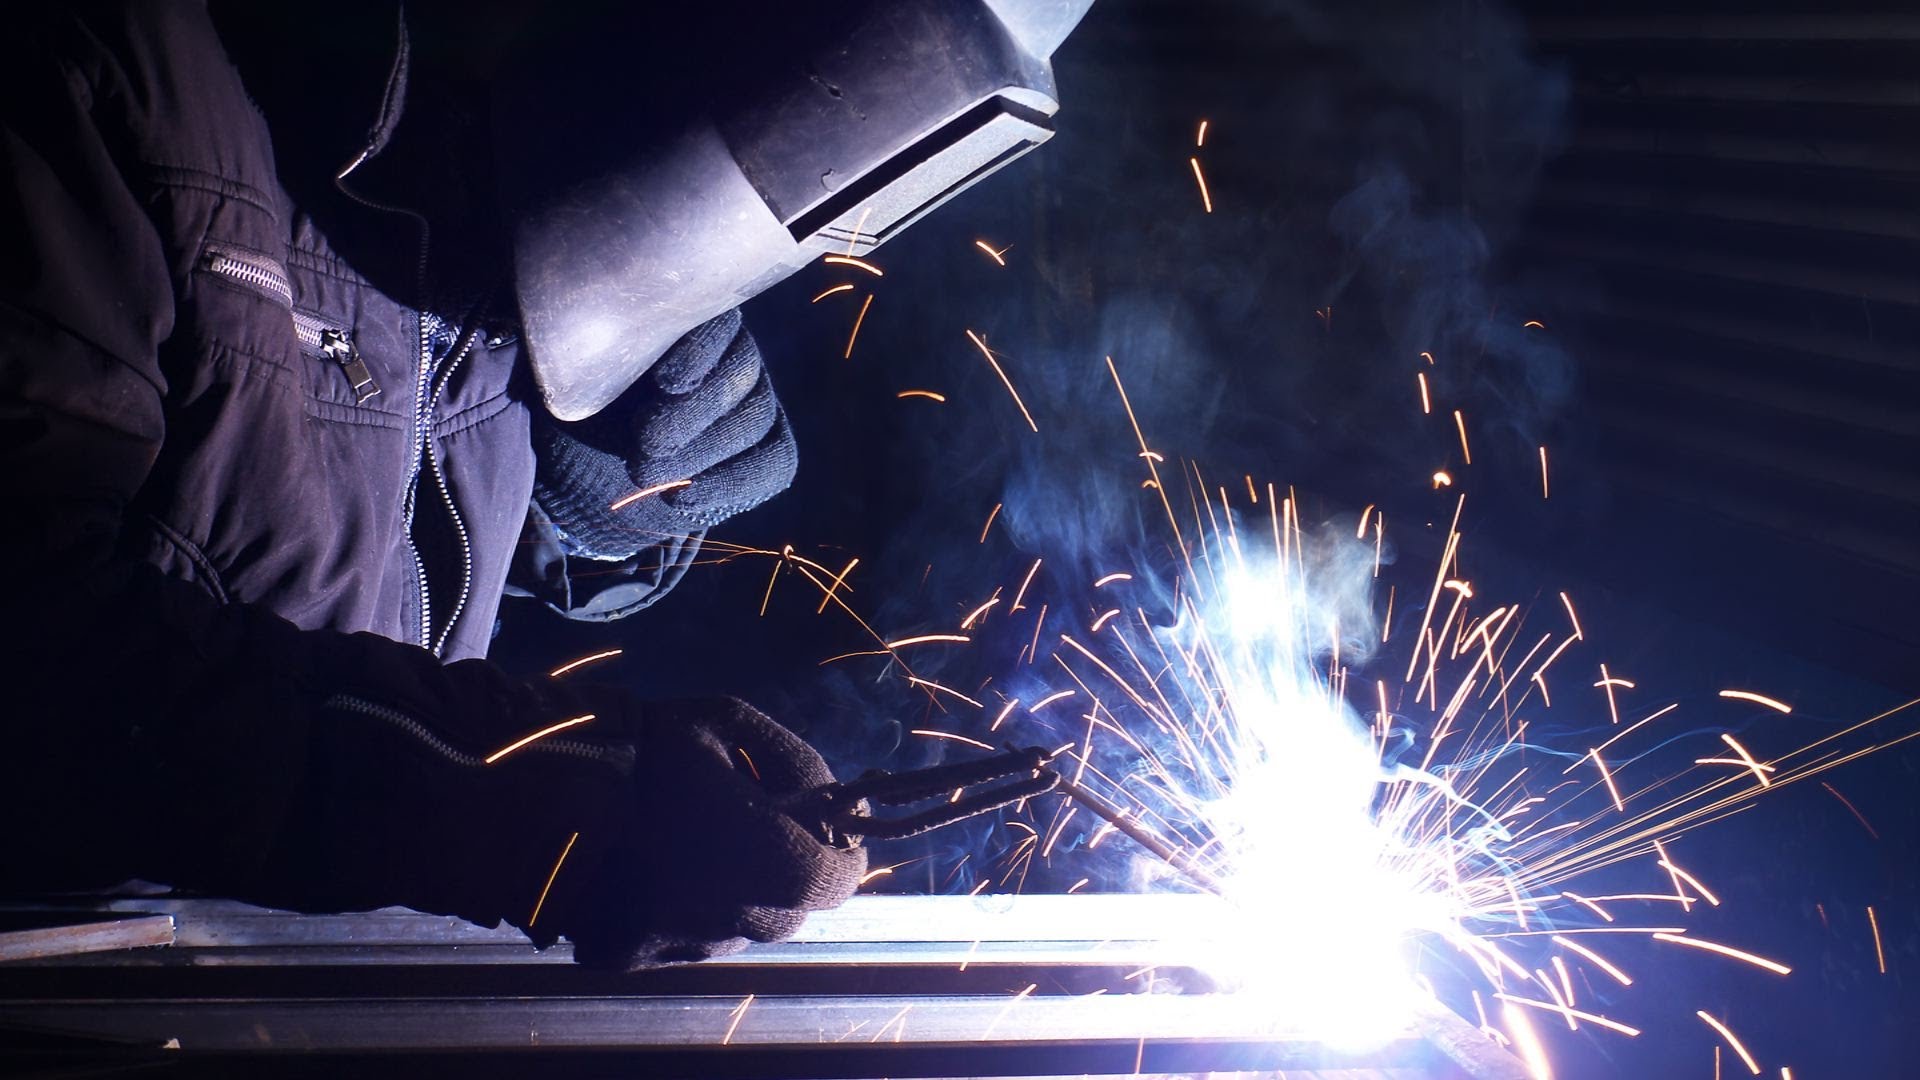 Advanced training in welding